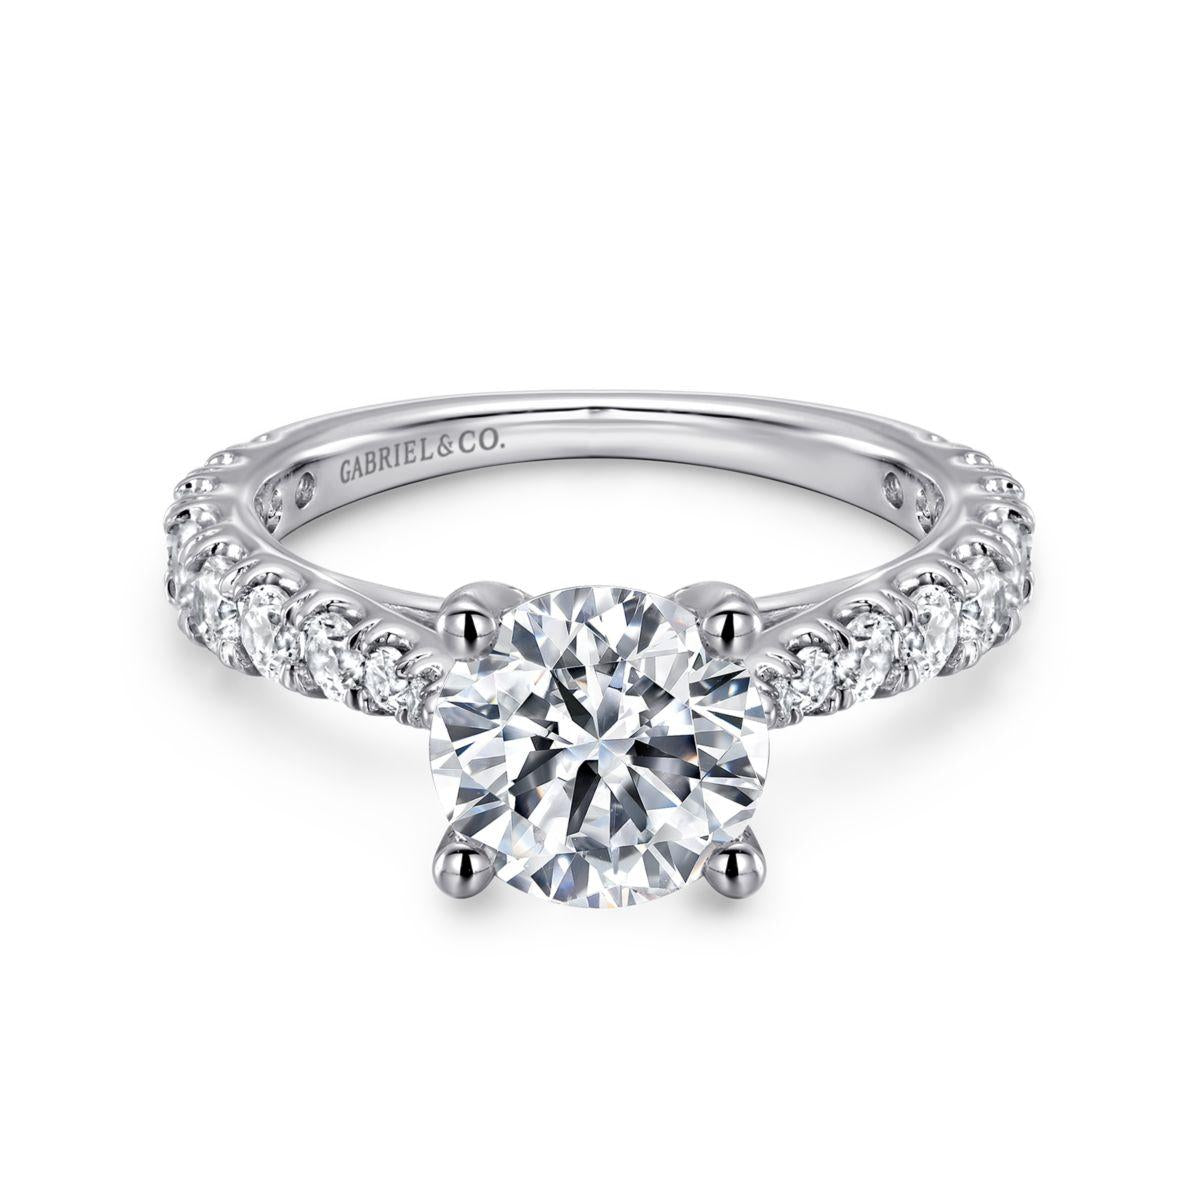 White Gold Round Diamond Engagement Ring Mounting